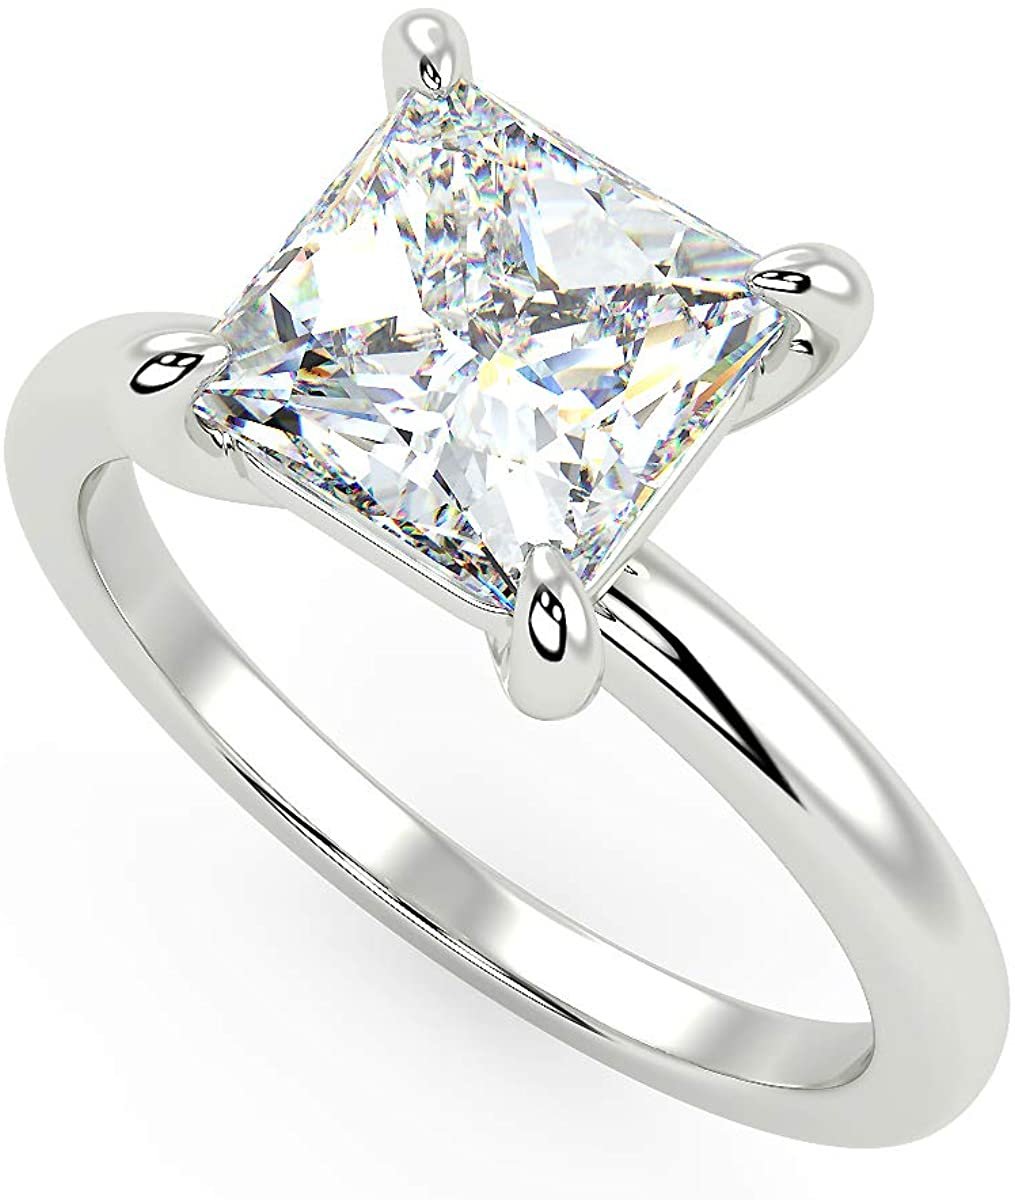 14K White Gold Starnish Princess Cut Halo Engagement Ring